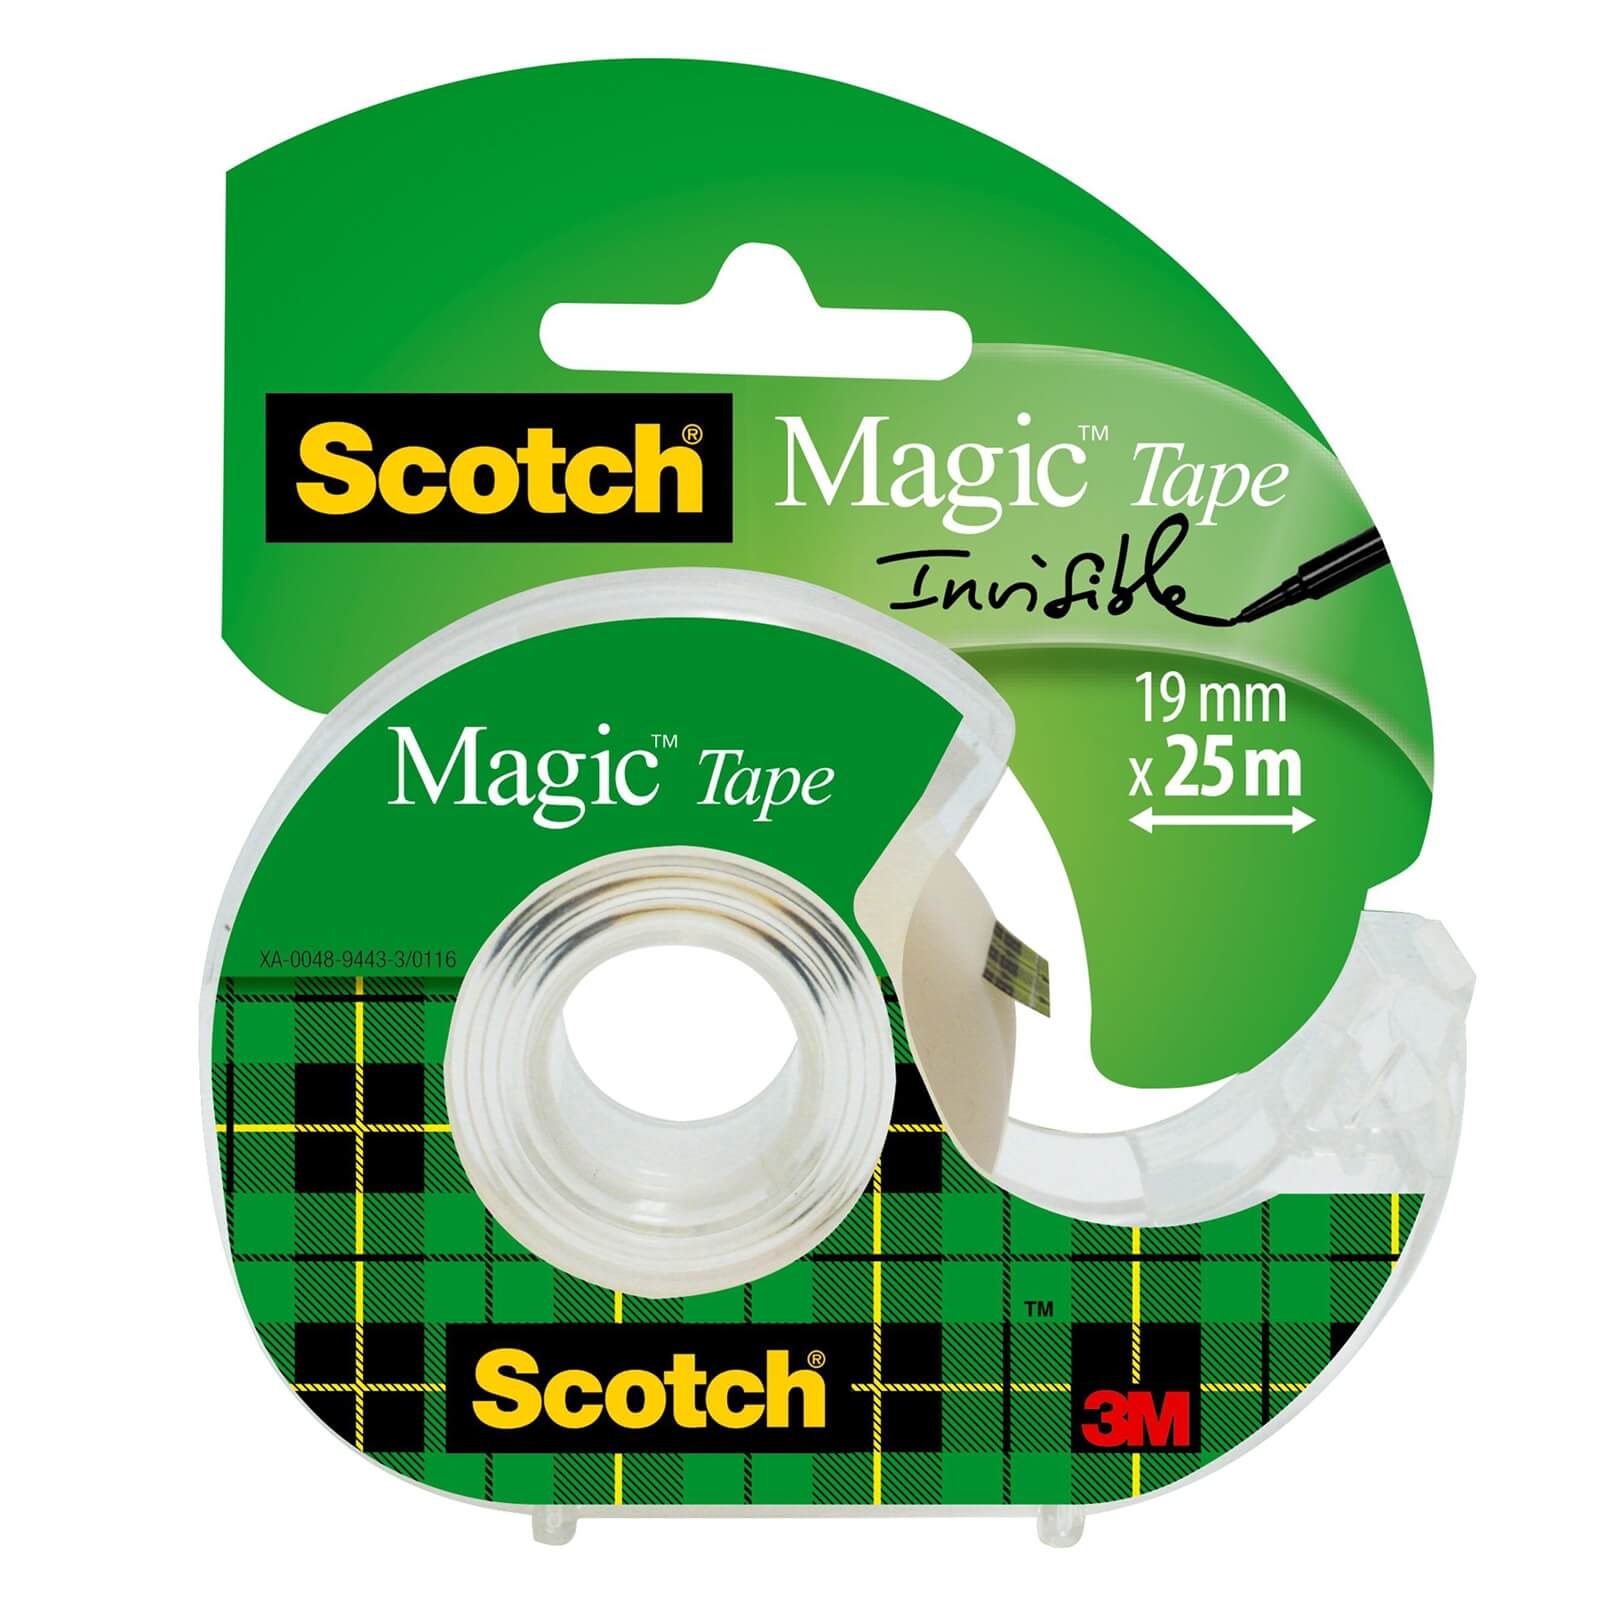 Scotch Magic Tape on Hand Held Dispenser - 19mm x 25m